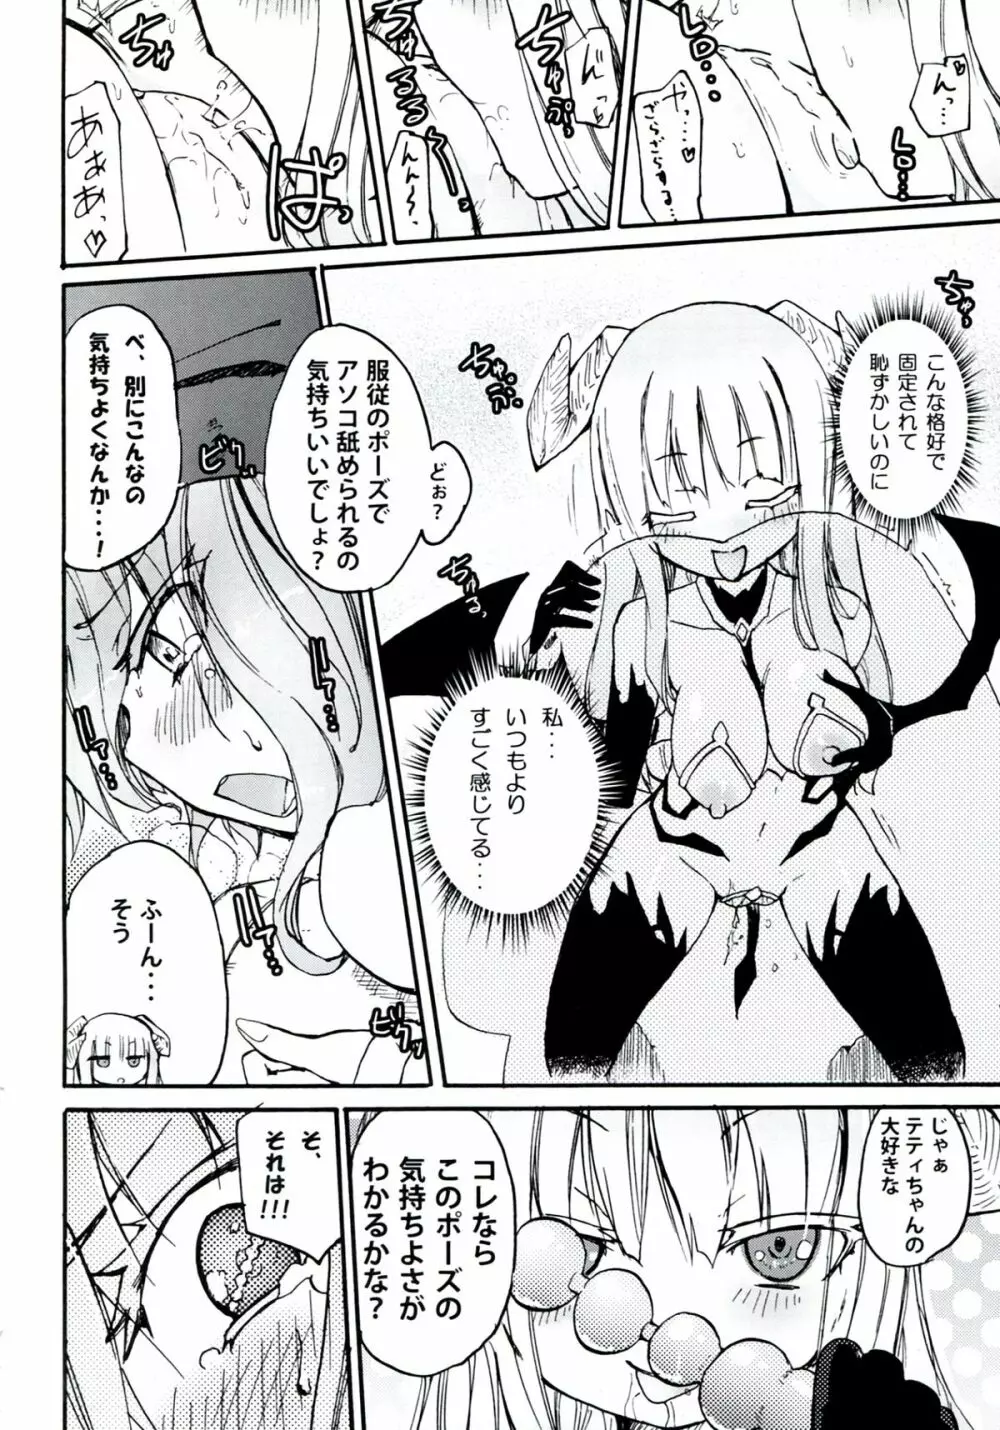 Homuraya Milk ★ Collection 2 - page46